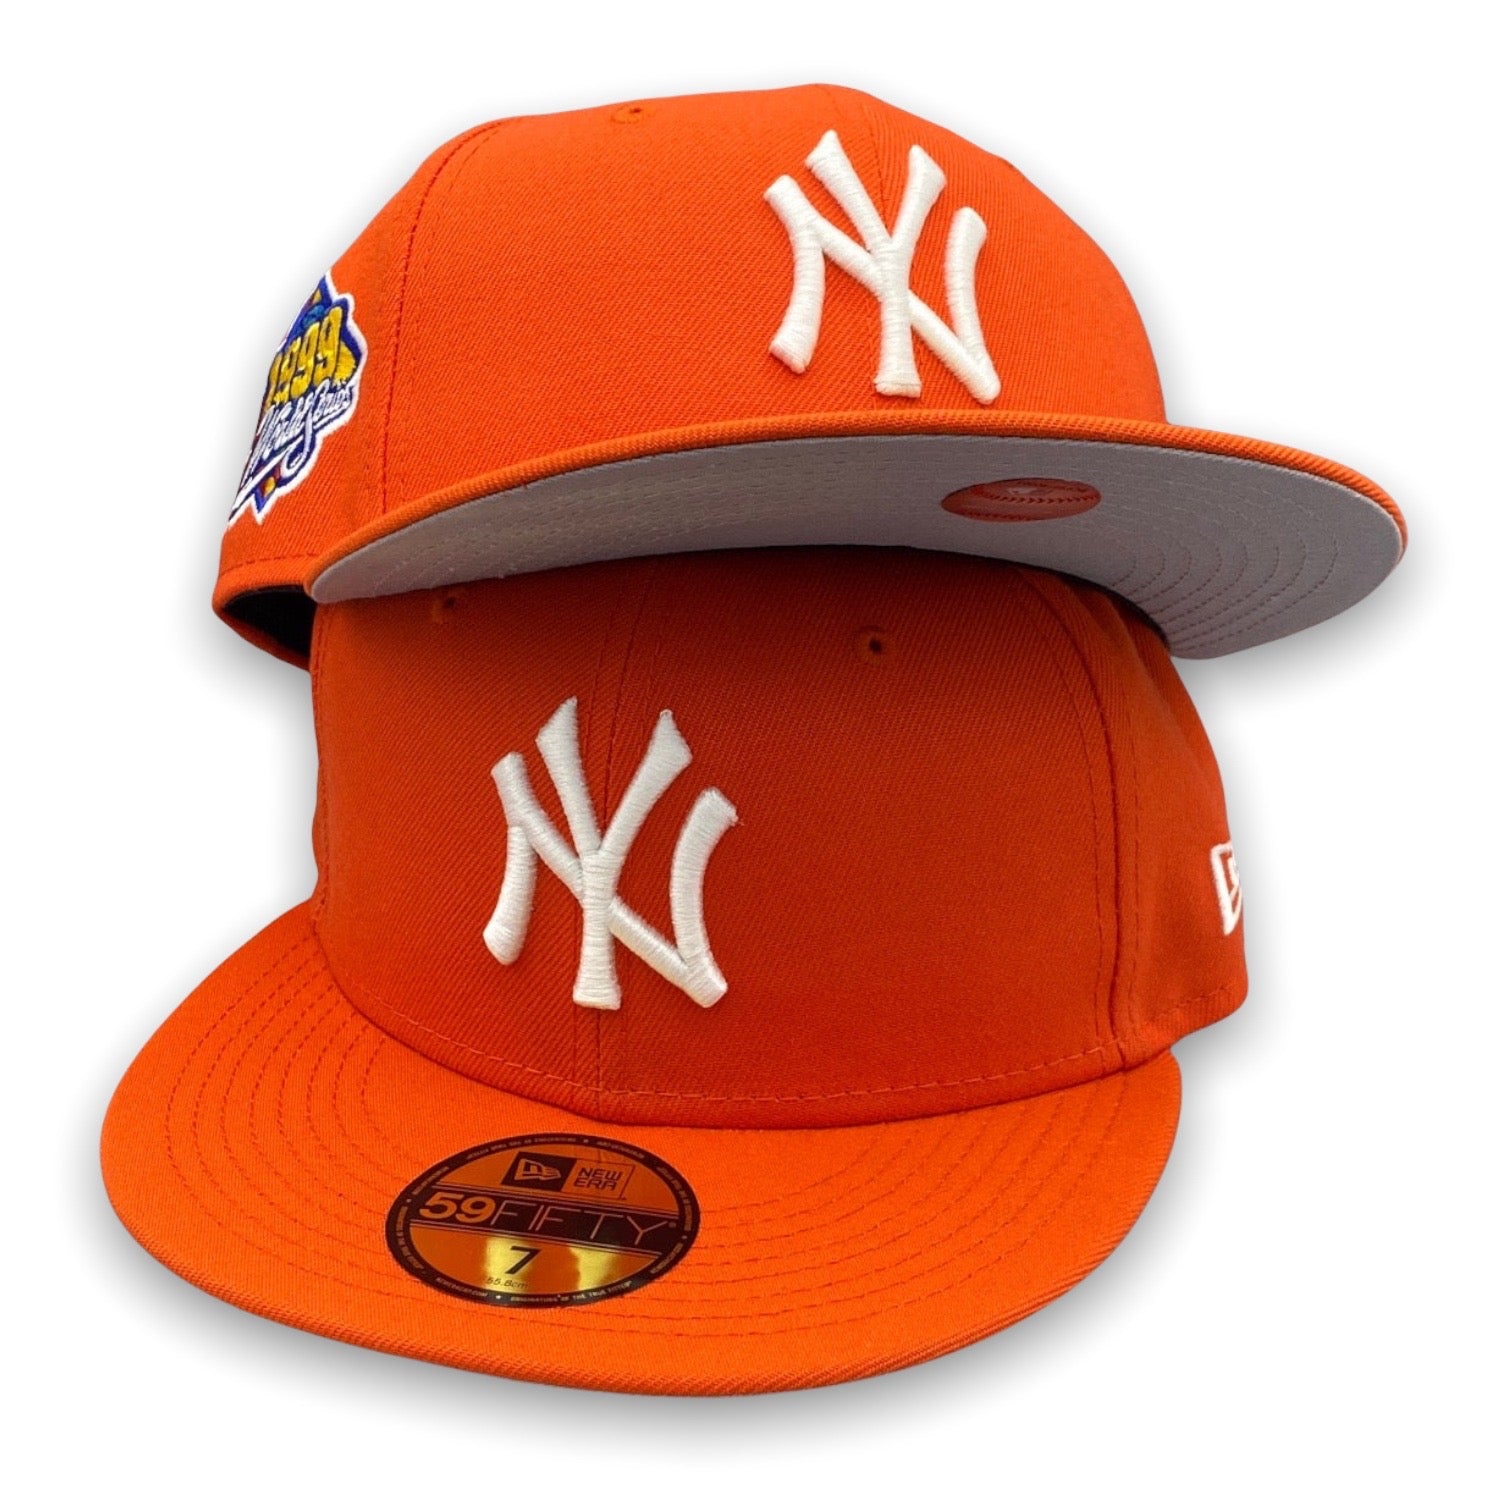 NY Yankees 1999 Orange Hat New Era – CAP 59FIFTY KING USA World Series